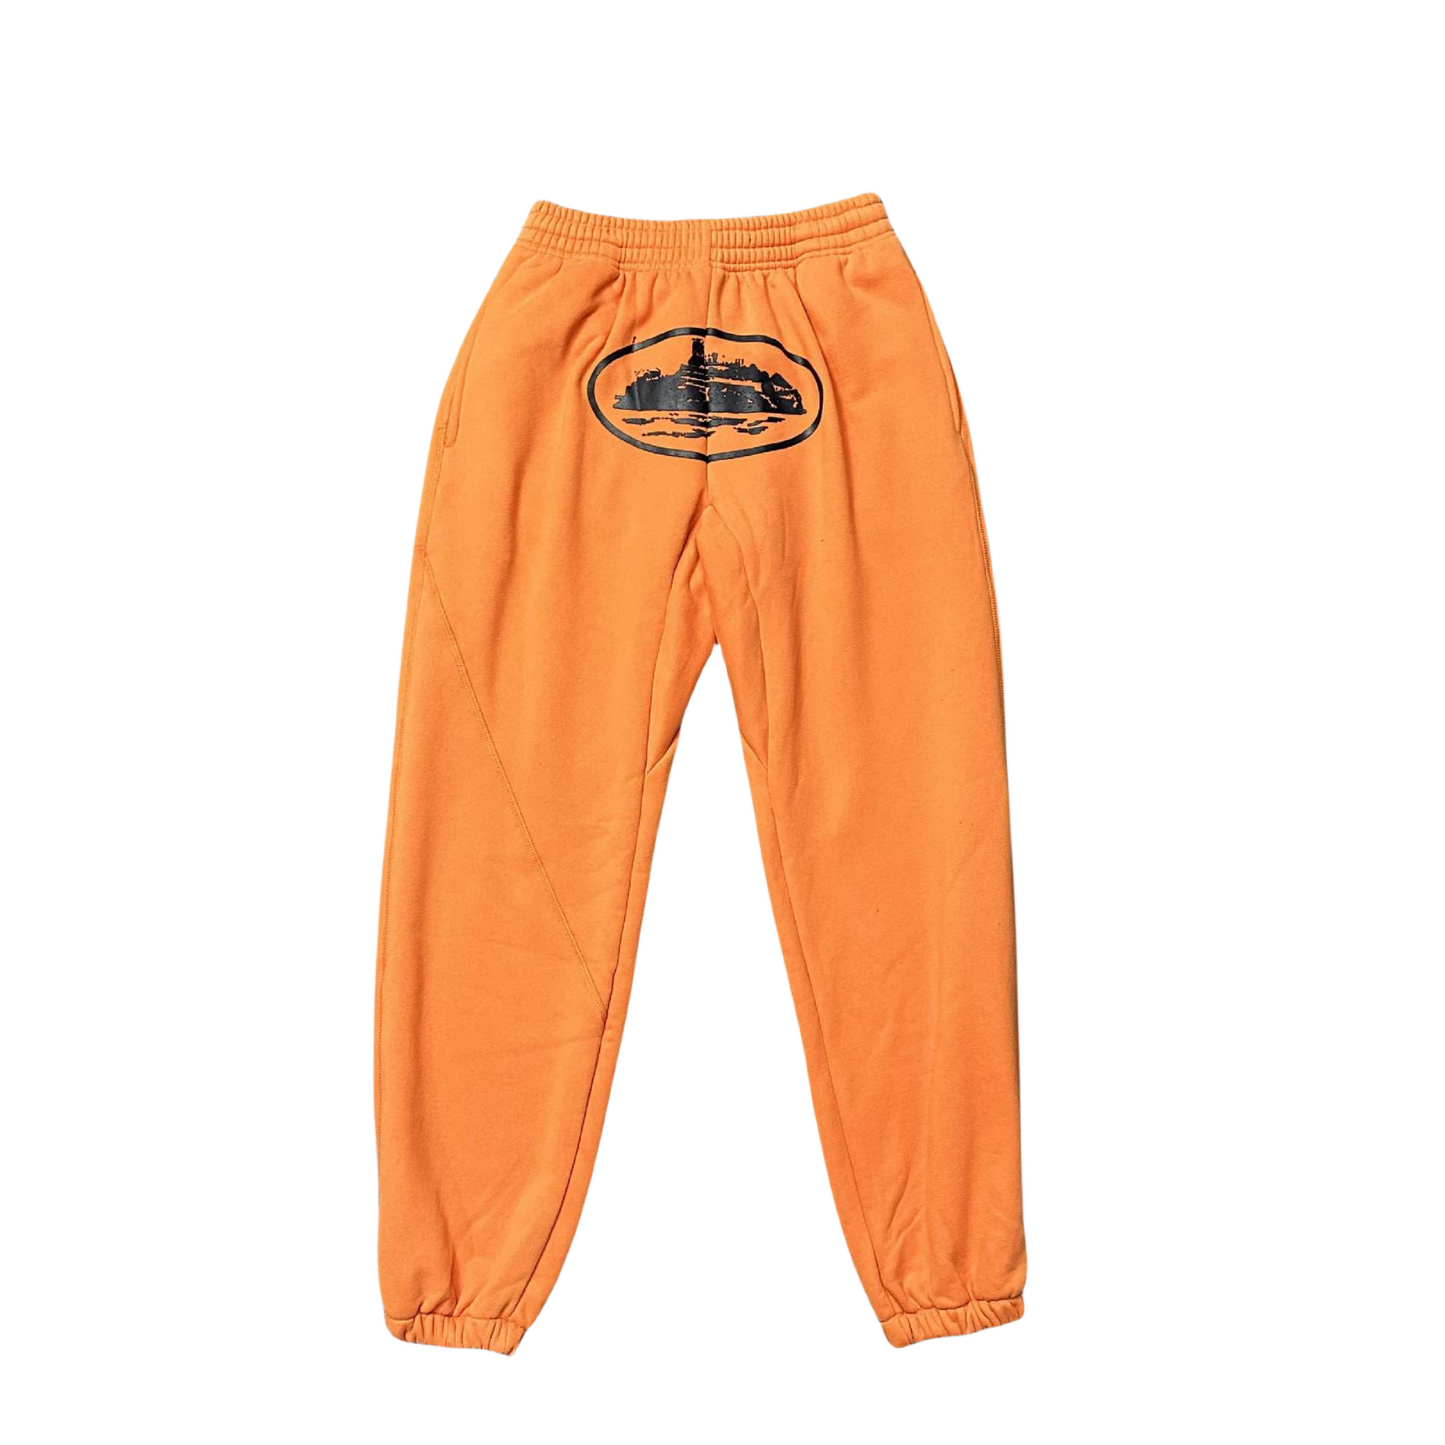 Corteiz Alcatraz Jogging Trousers - Orange